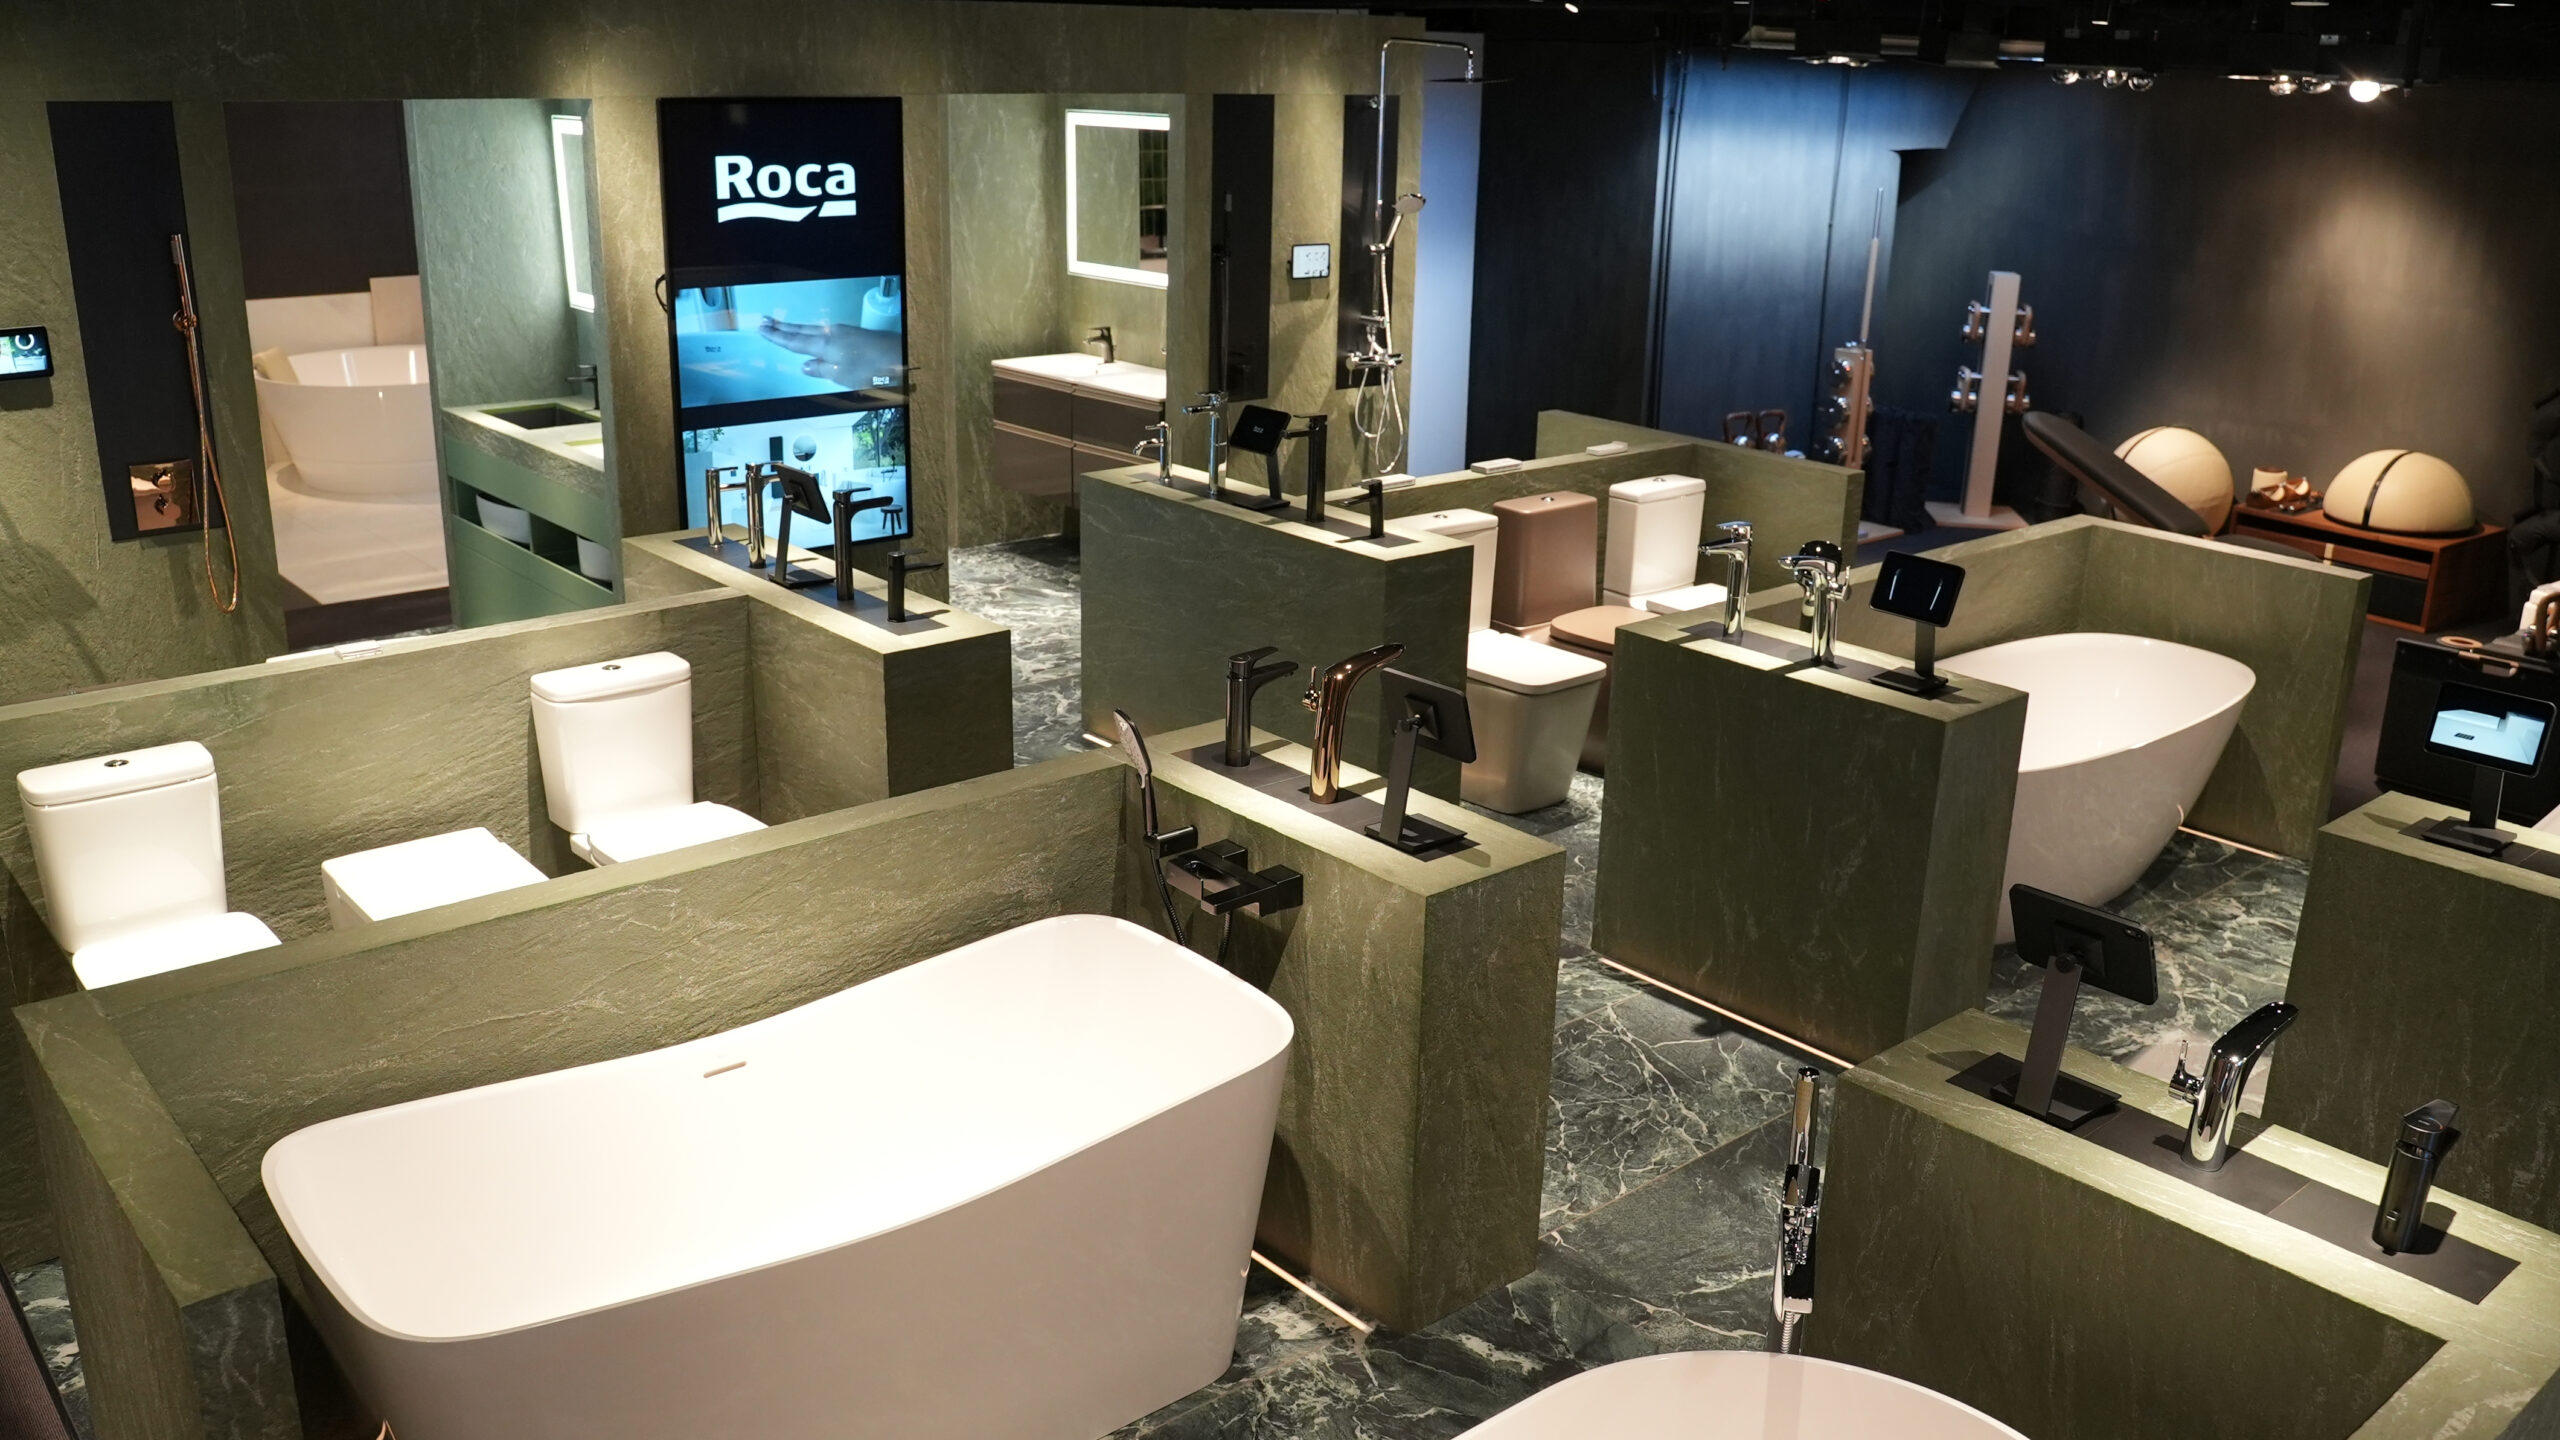 Roca: Bathrooms that delight